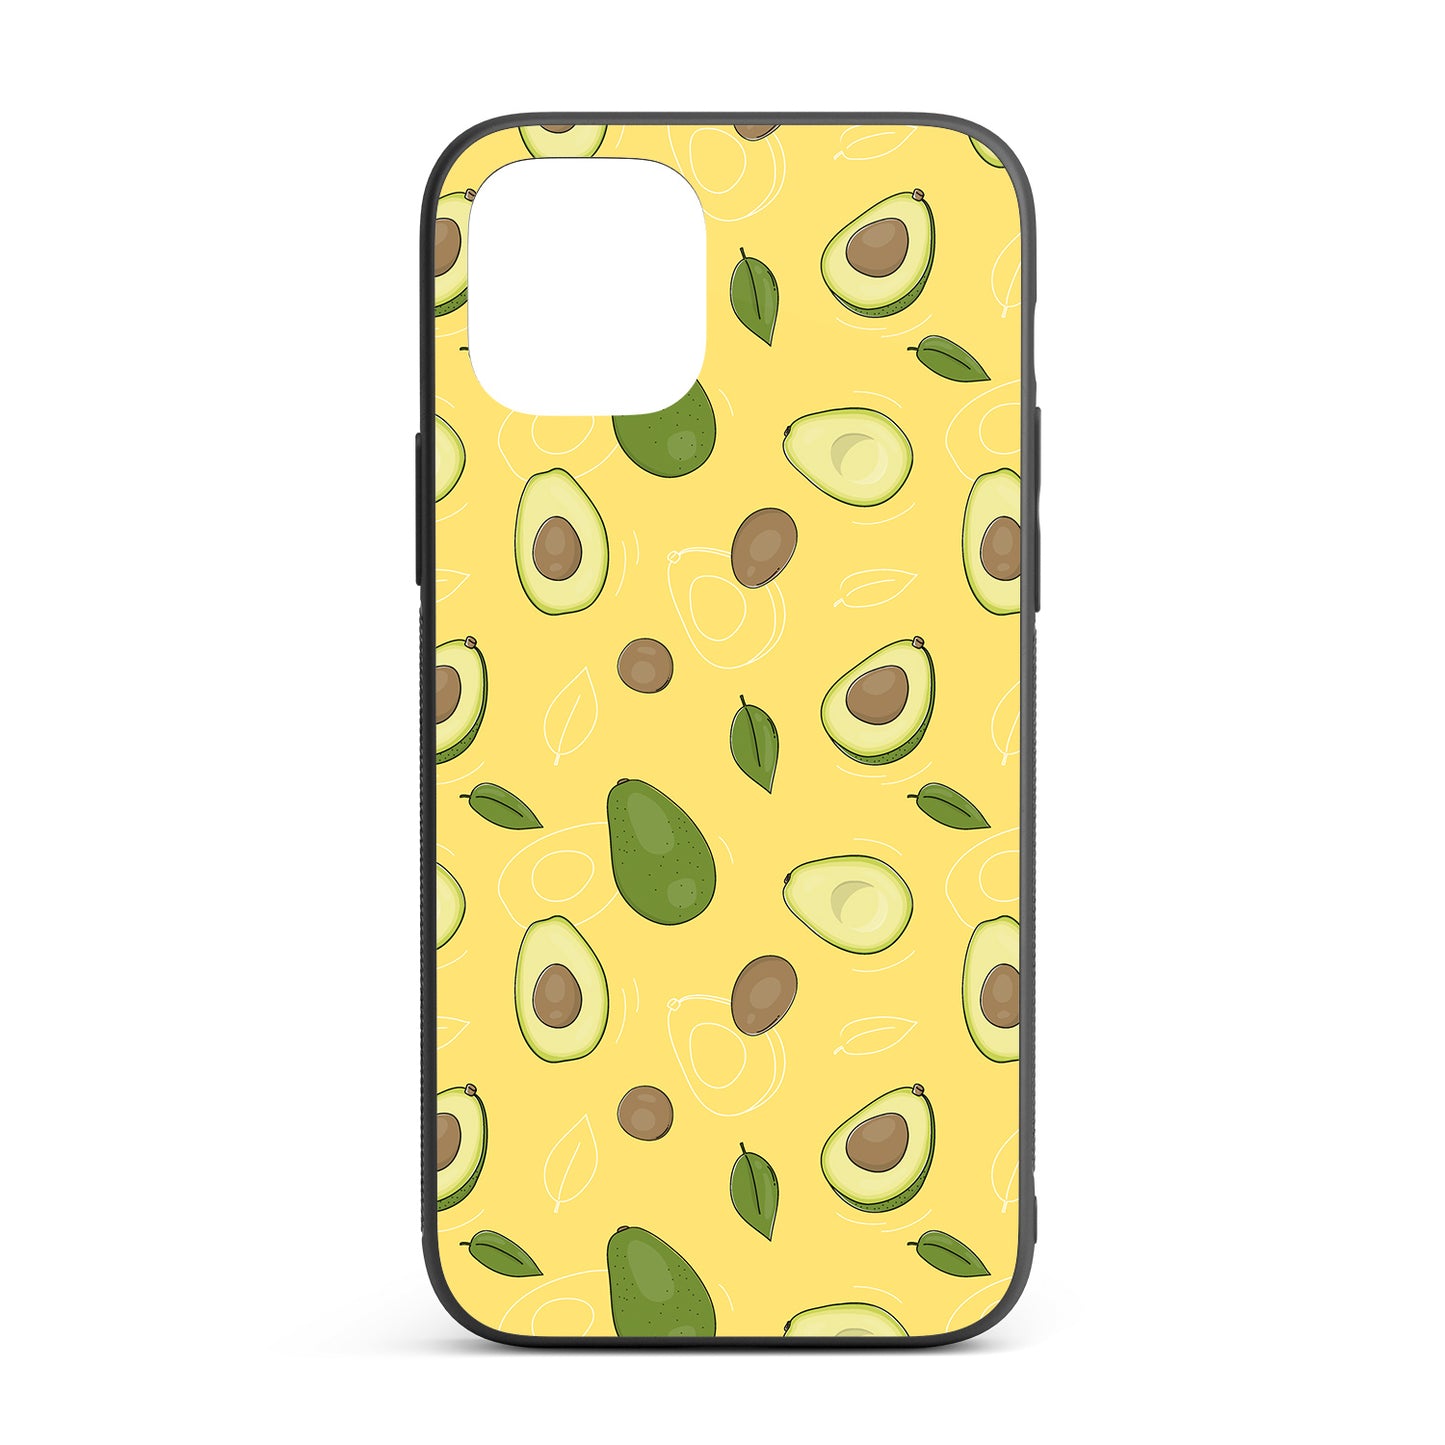 Avocado iPhone glass case